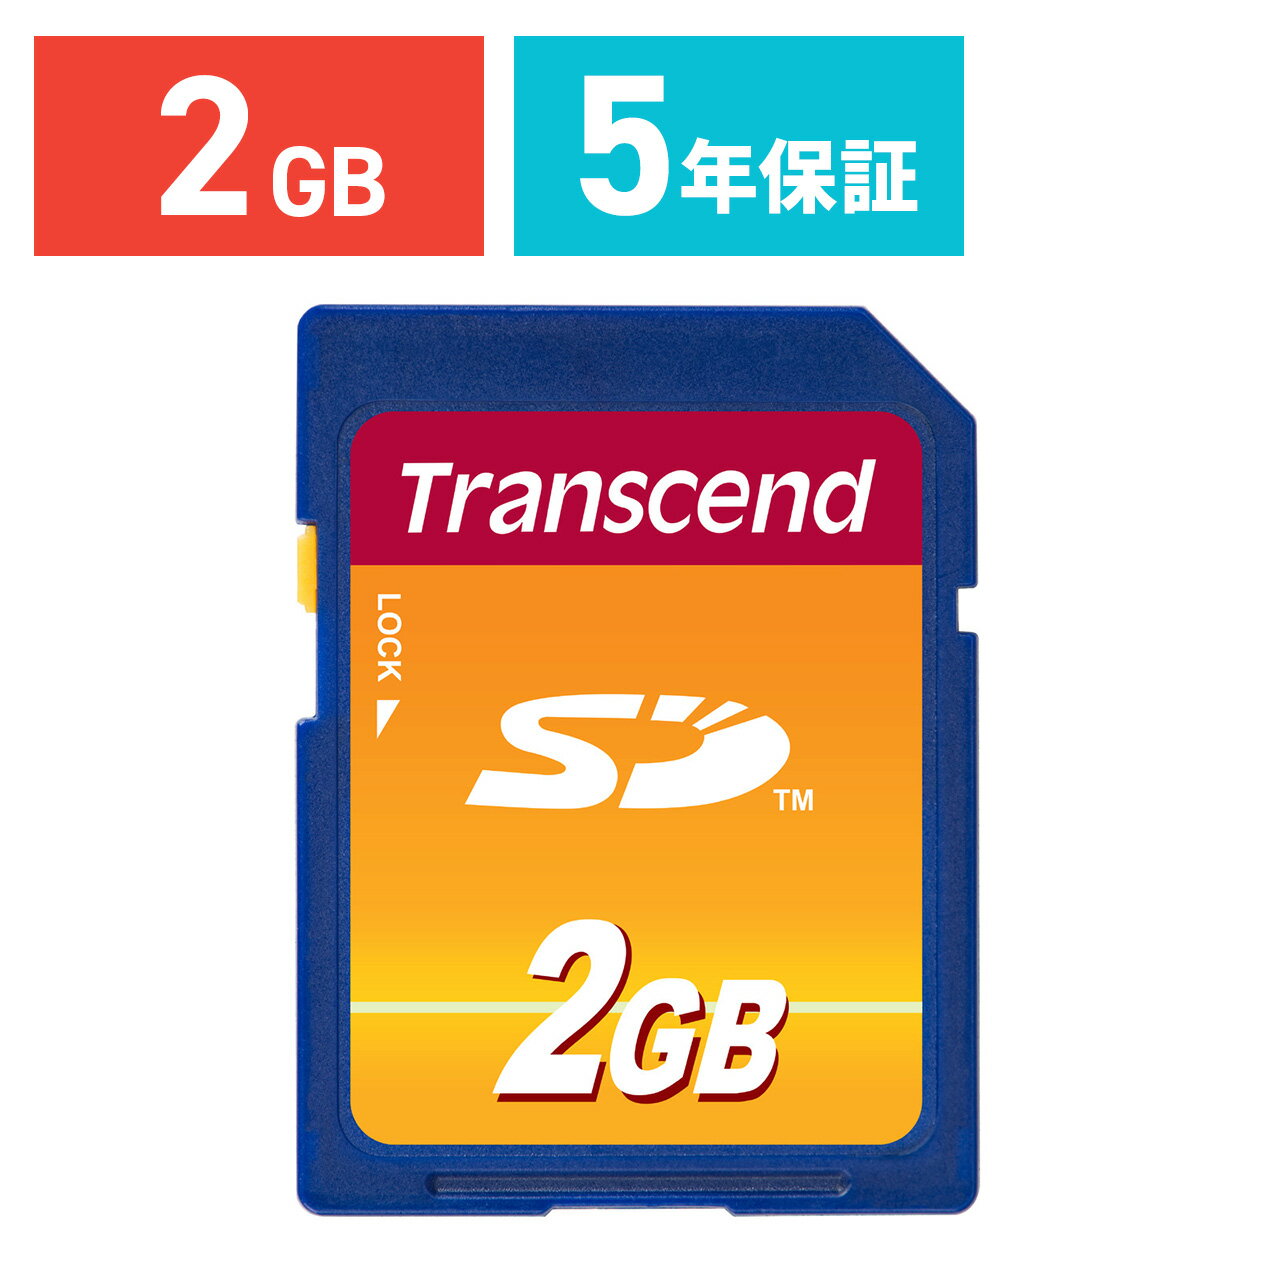 Transcend <strong>SDカード</strong> 2GB 5年保証 Wii対応 SDメモリーカード 入学 卒業